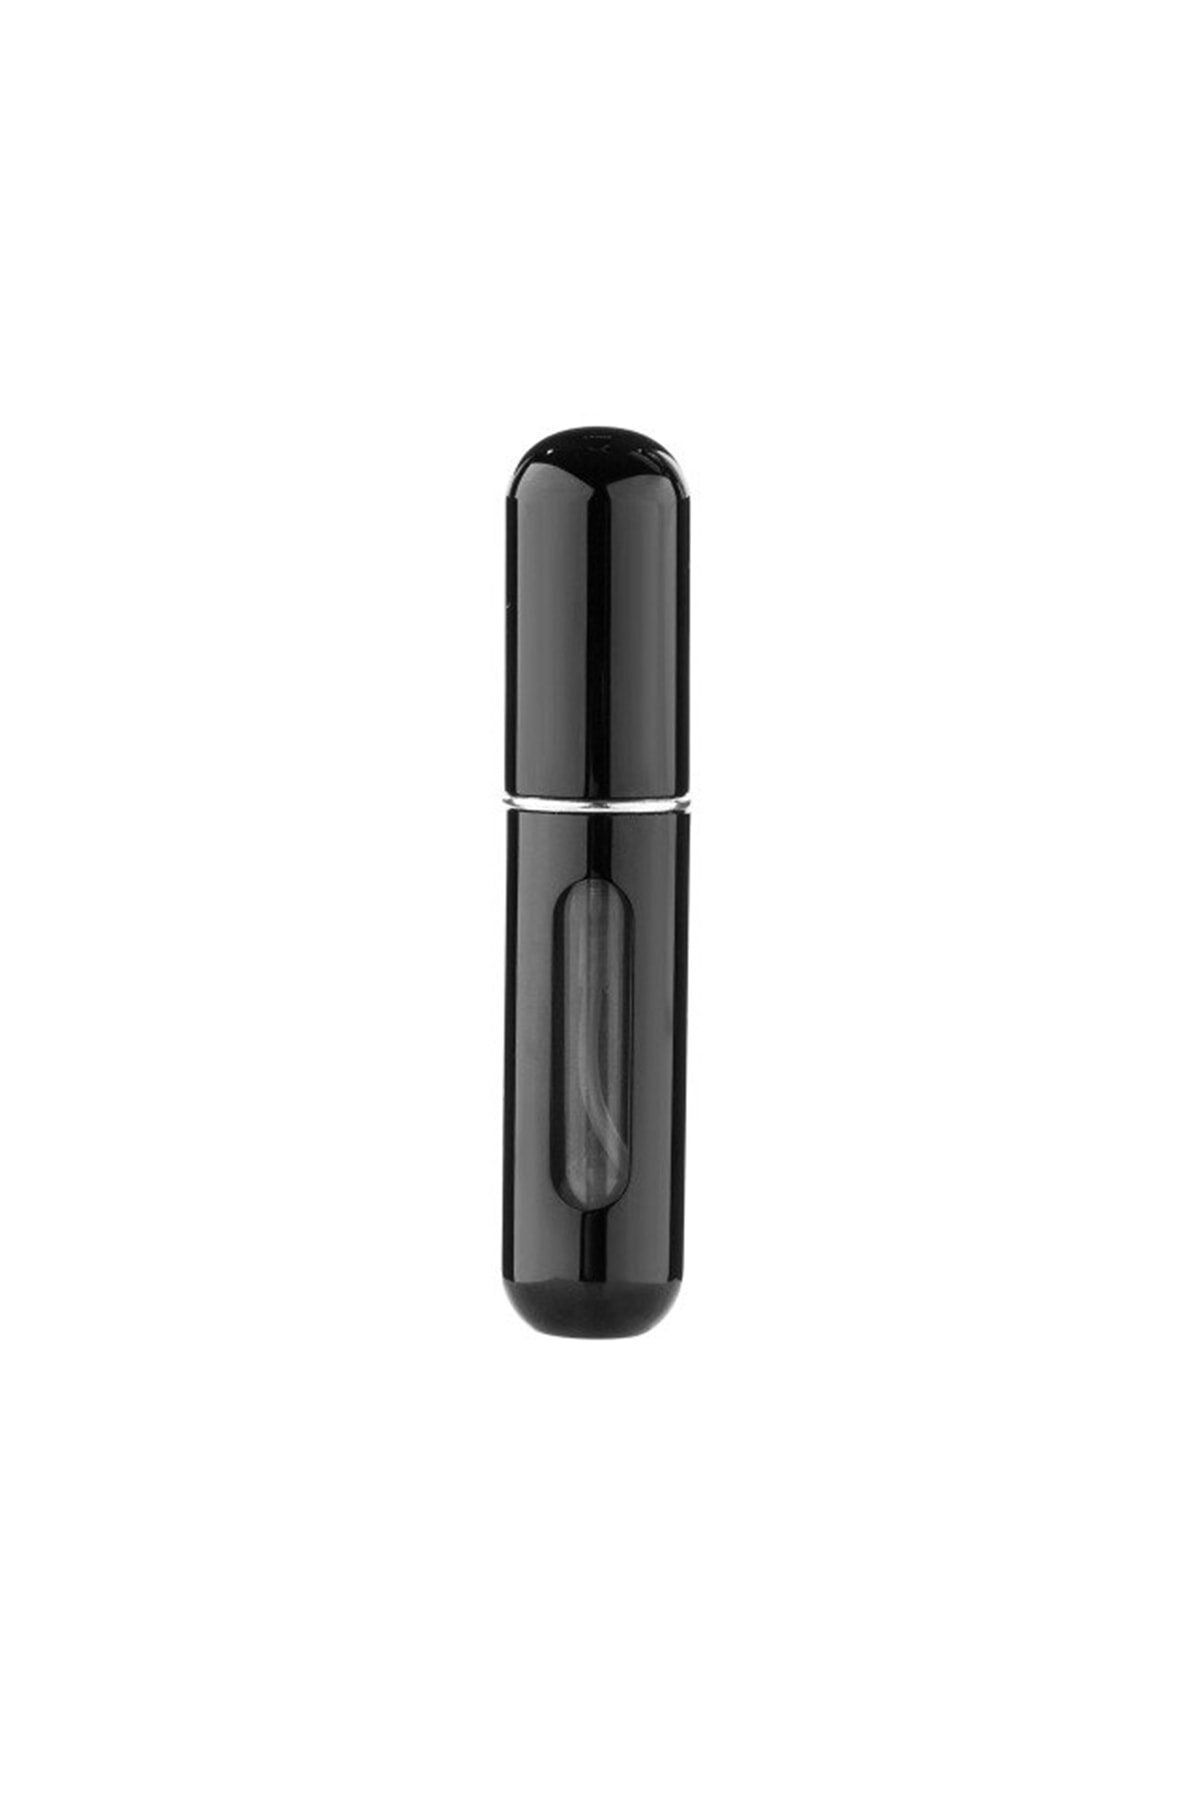 checkmate Siyah Doldurulabilir Mini Parfüm Şişesi 4ml